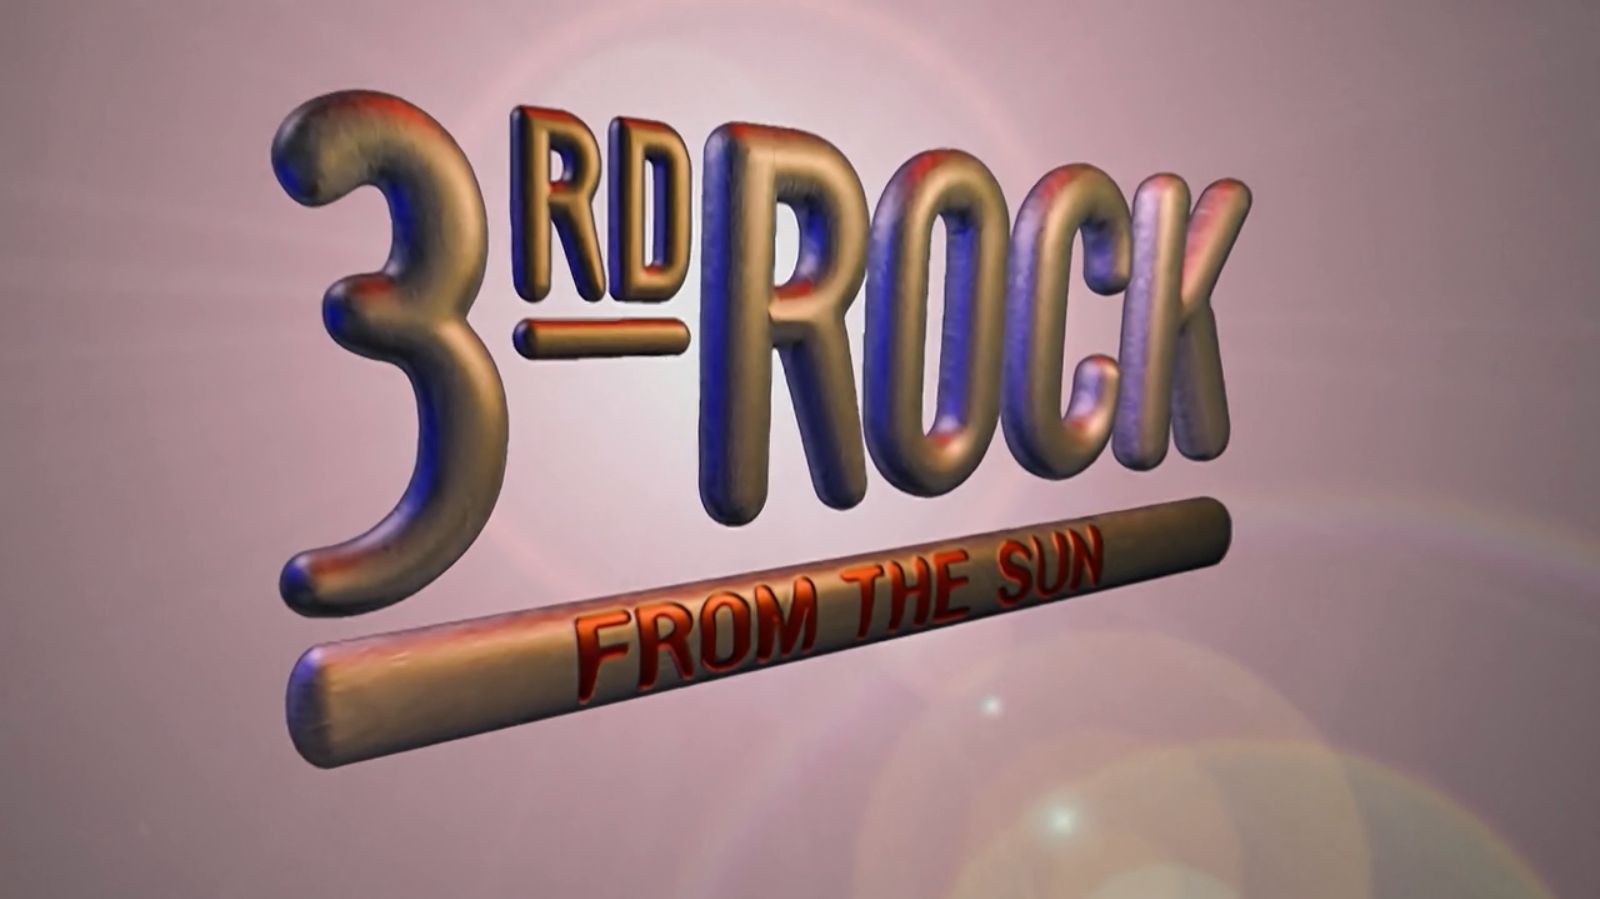 tv show, 3rd rock from the sun, logo